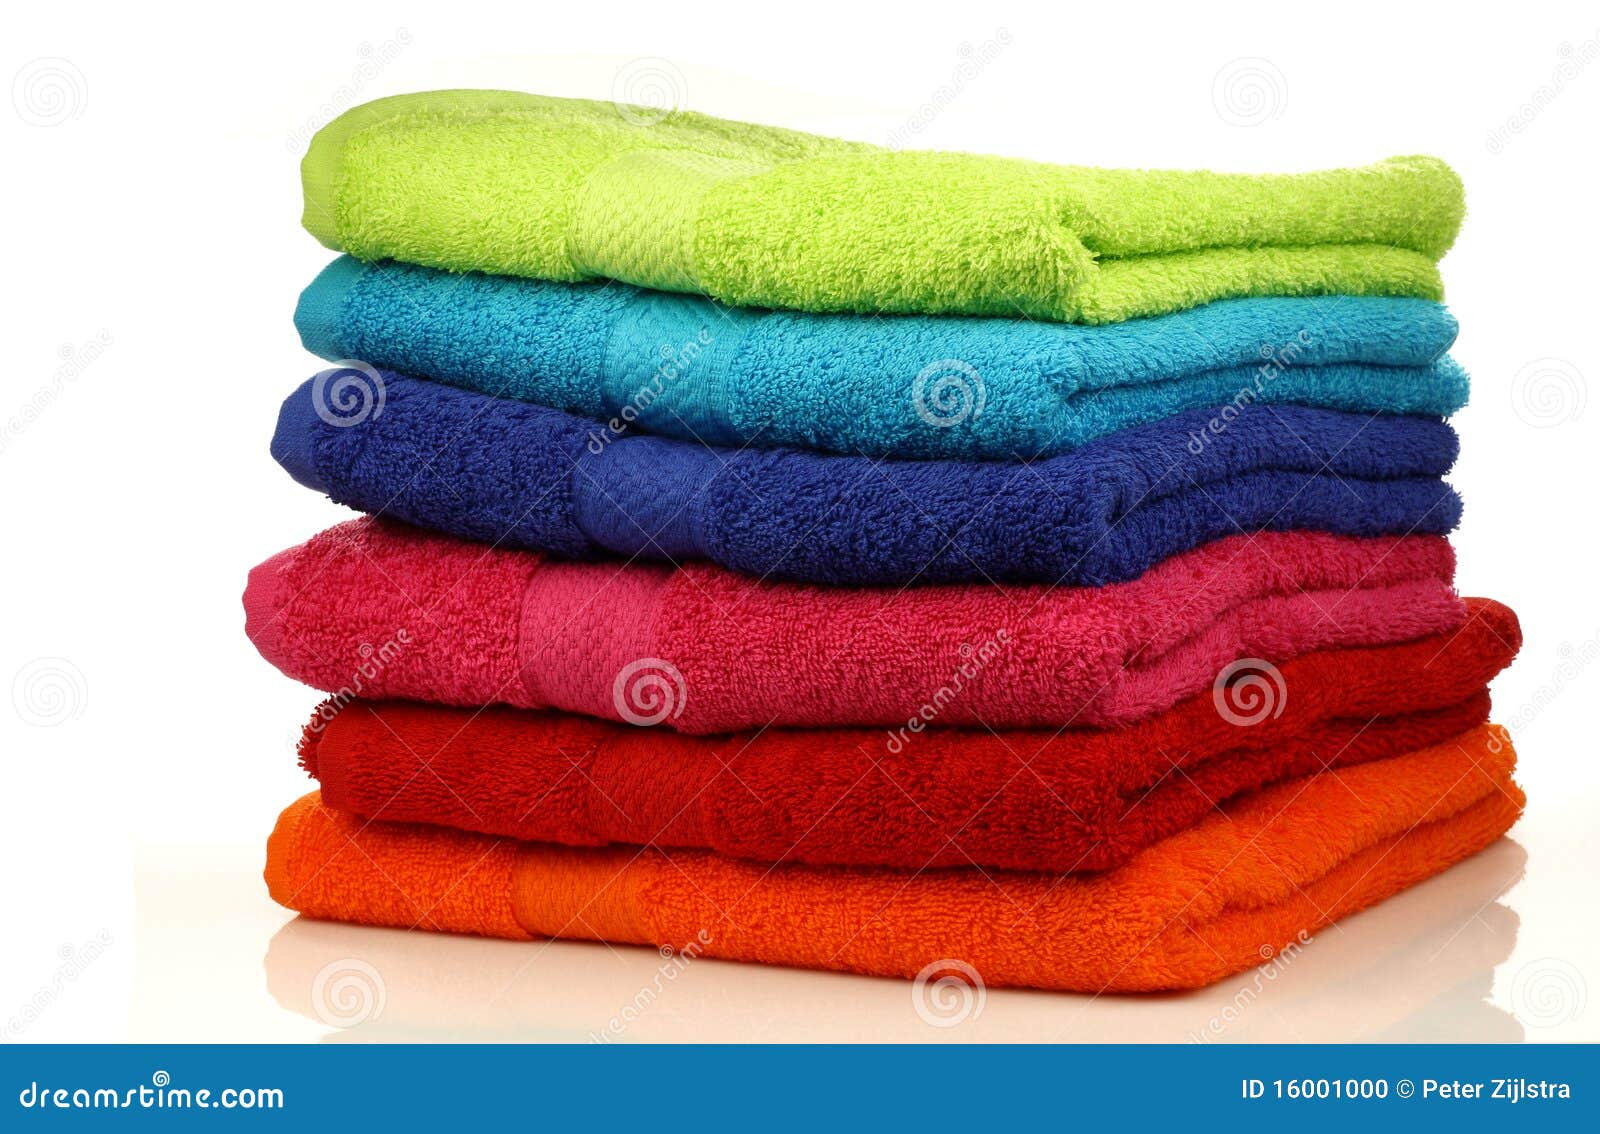 Полотенце широкое. Цветные полотенца. Полотенце/разноцветное. Махровые полотенца разноцветные. Разноцветные палатенцы.